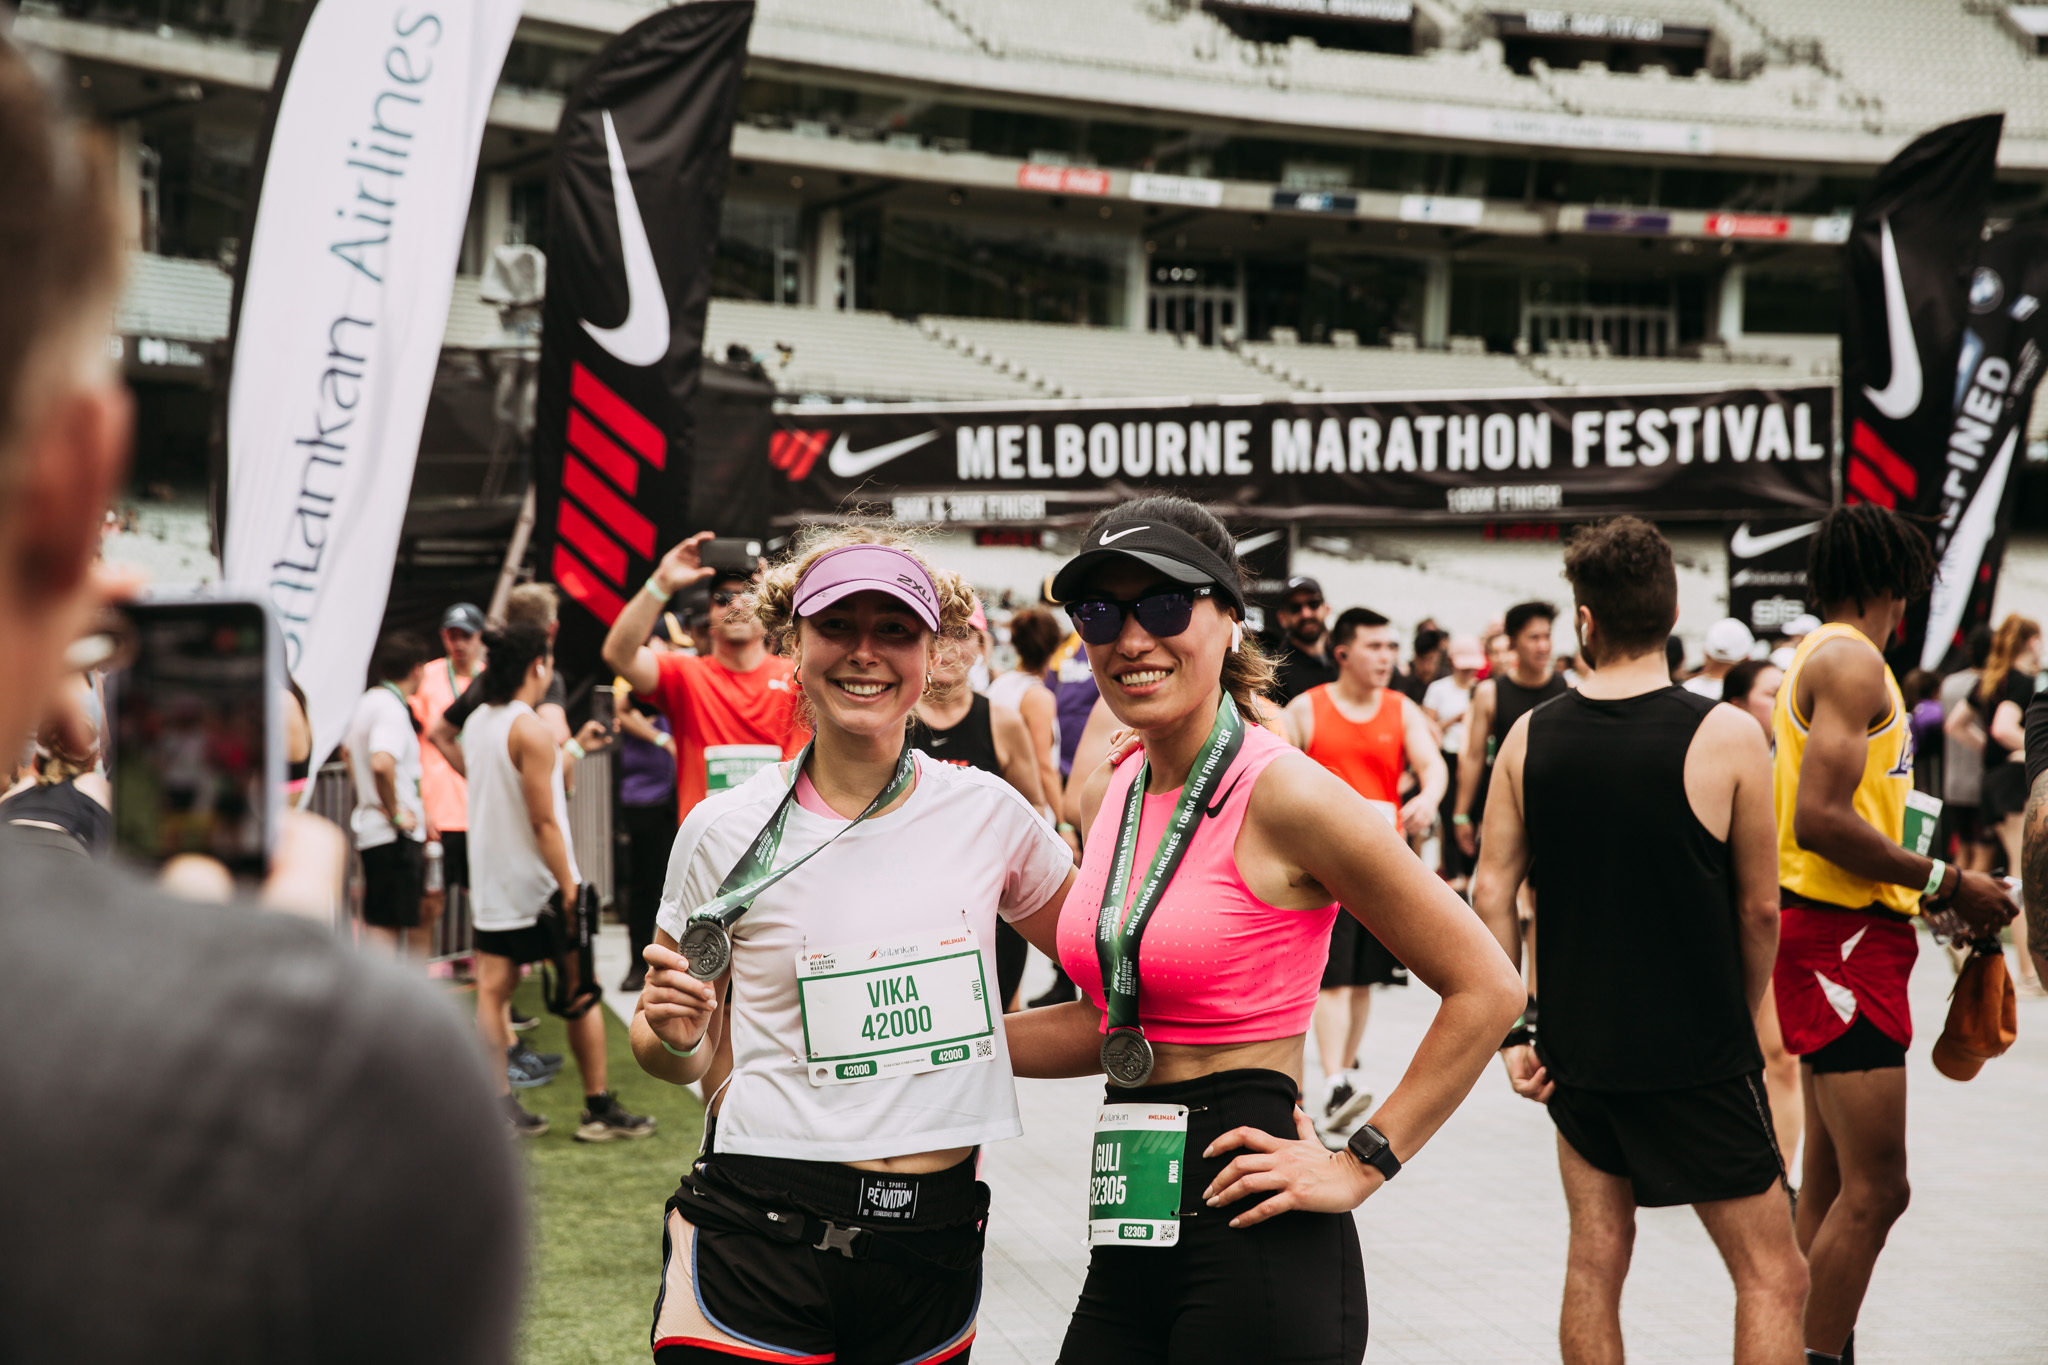 pantalones mareado Tratado Nike Melbourne Marathon Festival returns this October